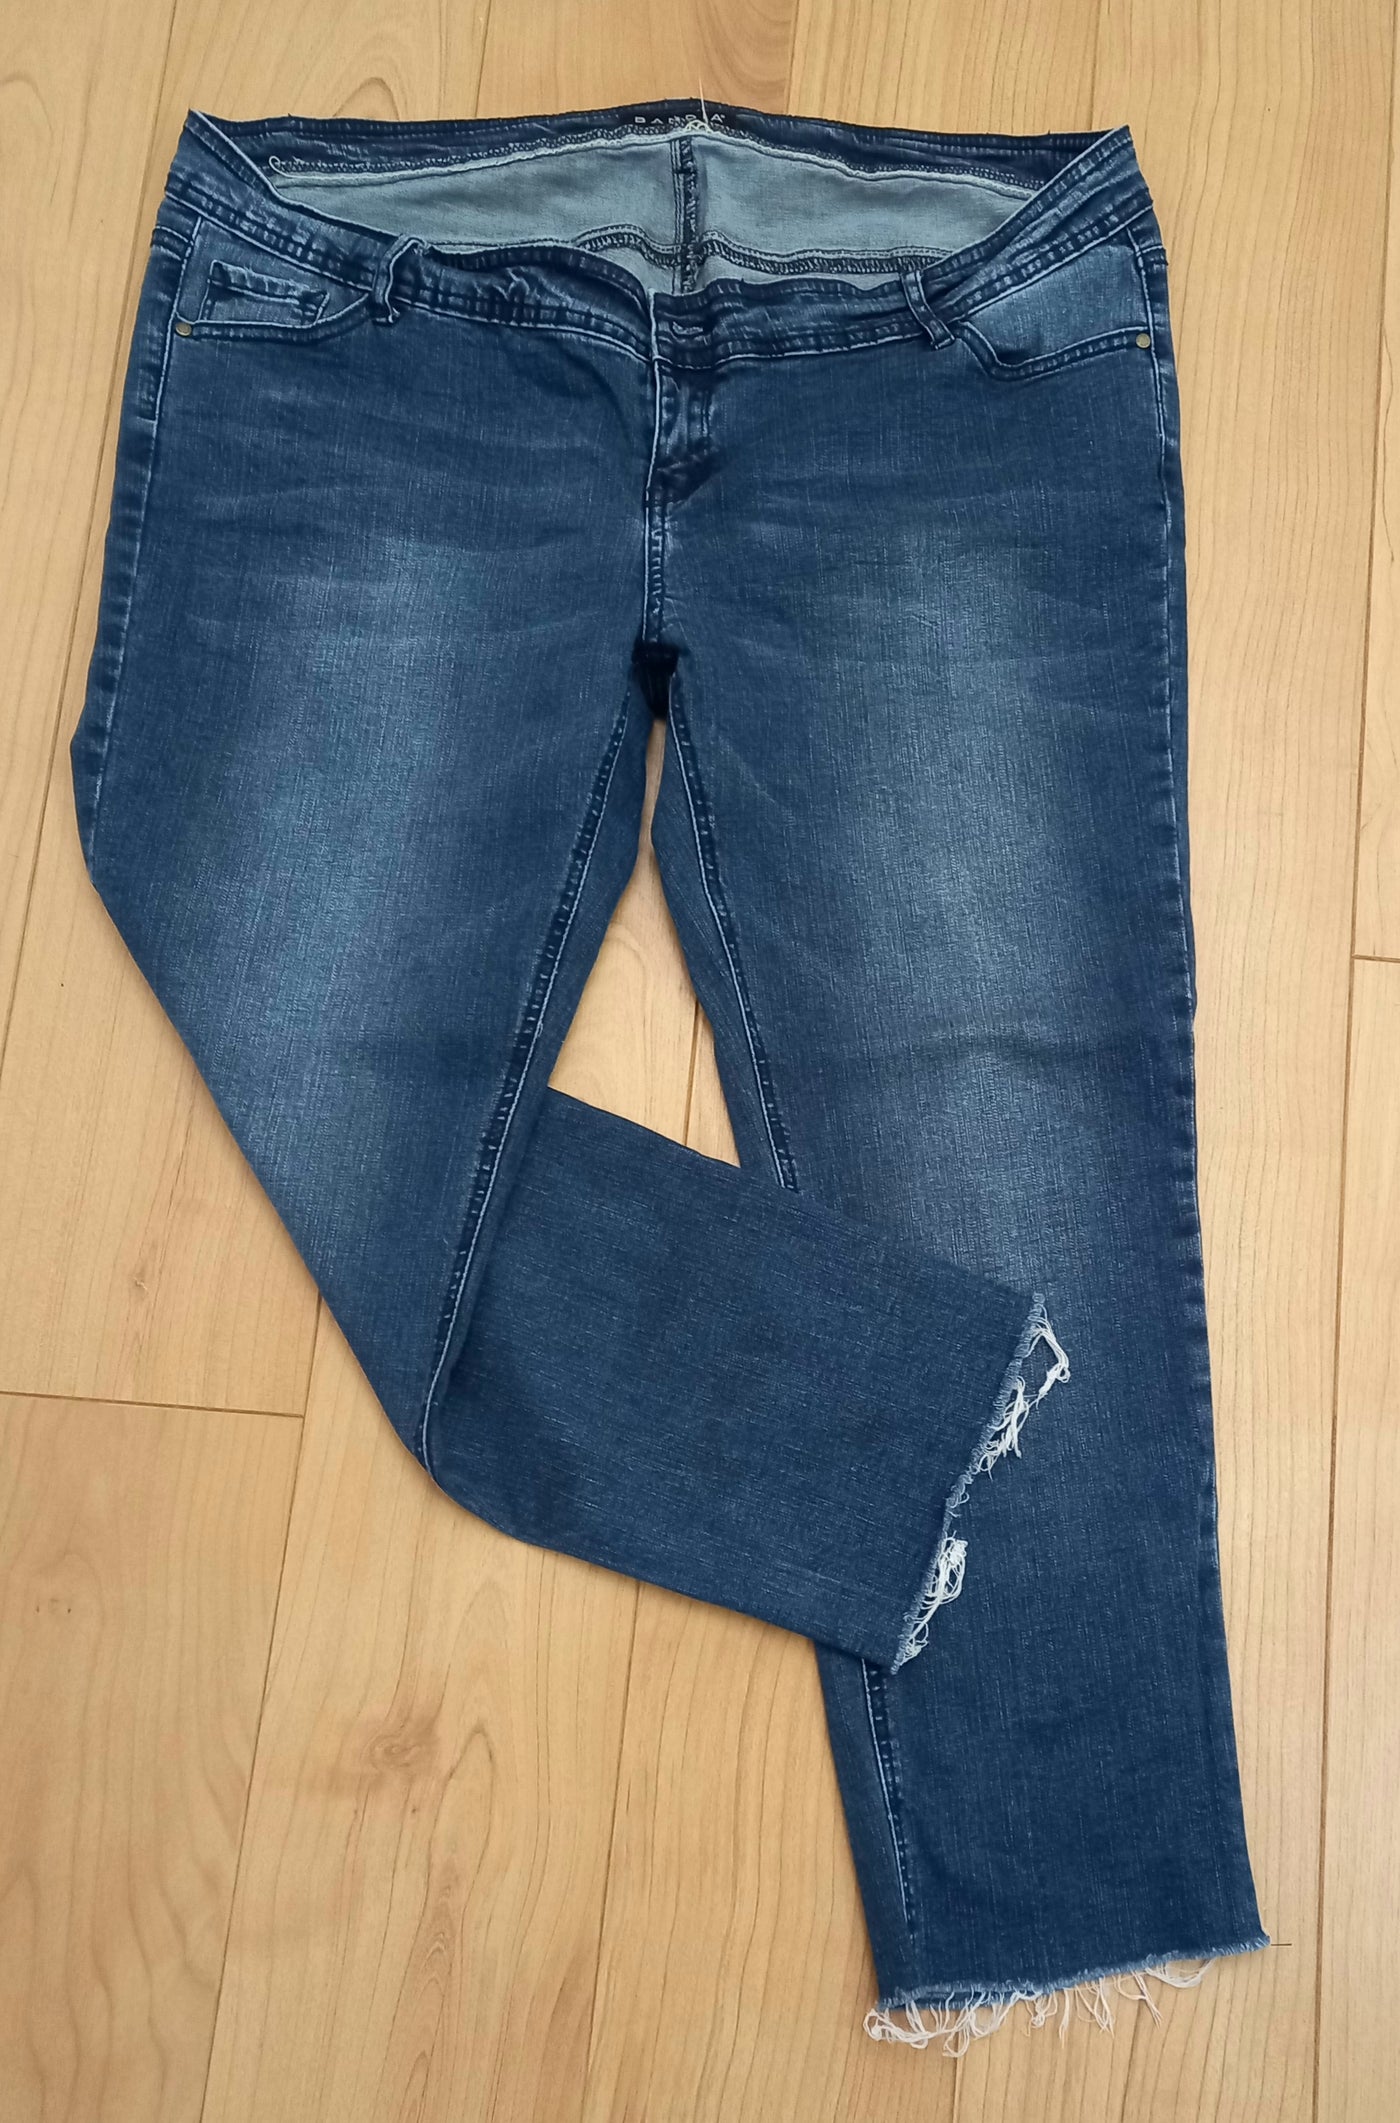 Bandia Dark Blue Underbump Jeans - Size 14 short